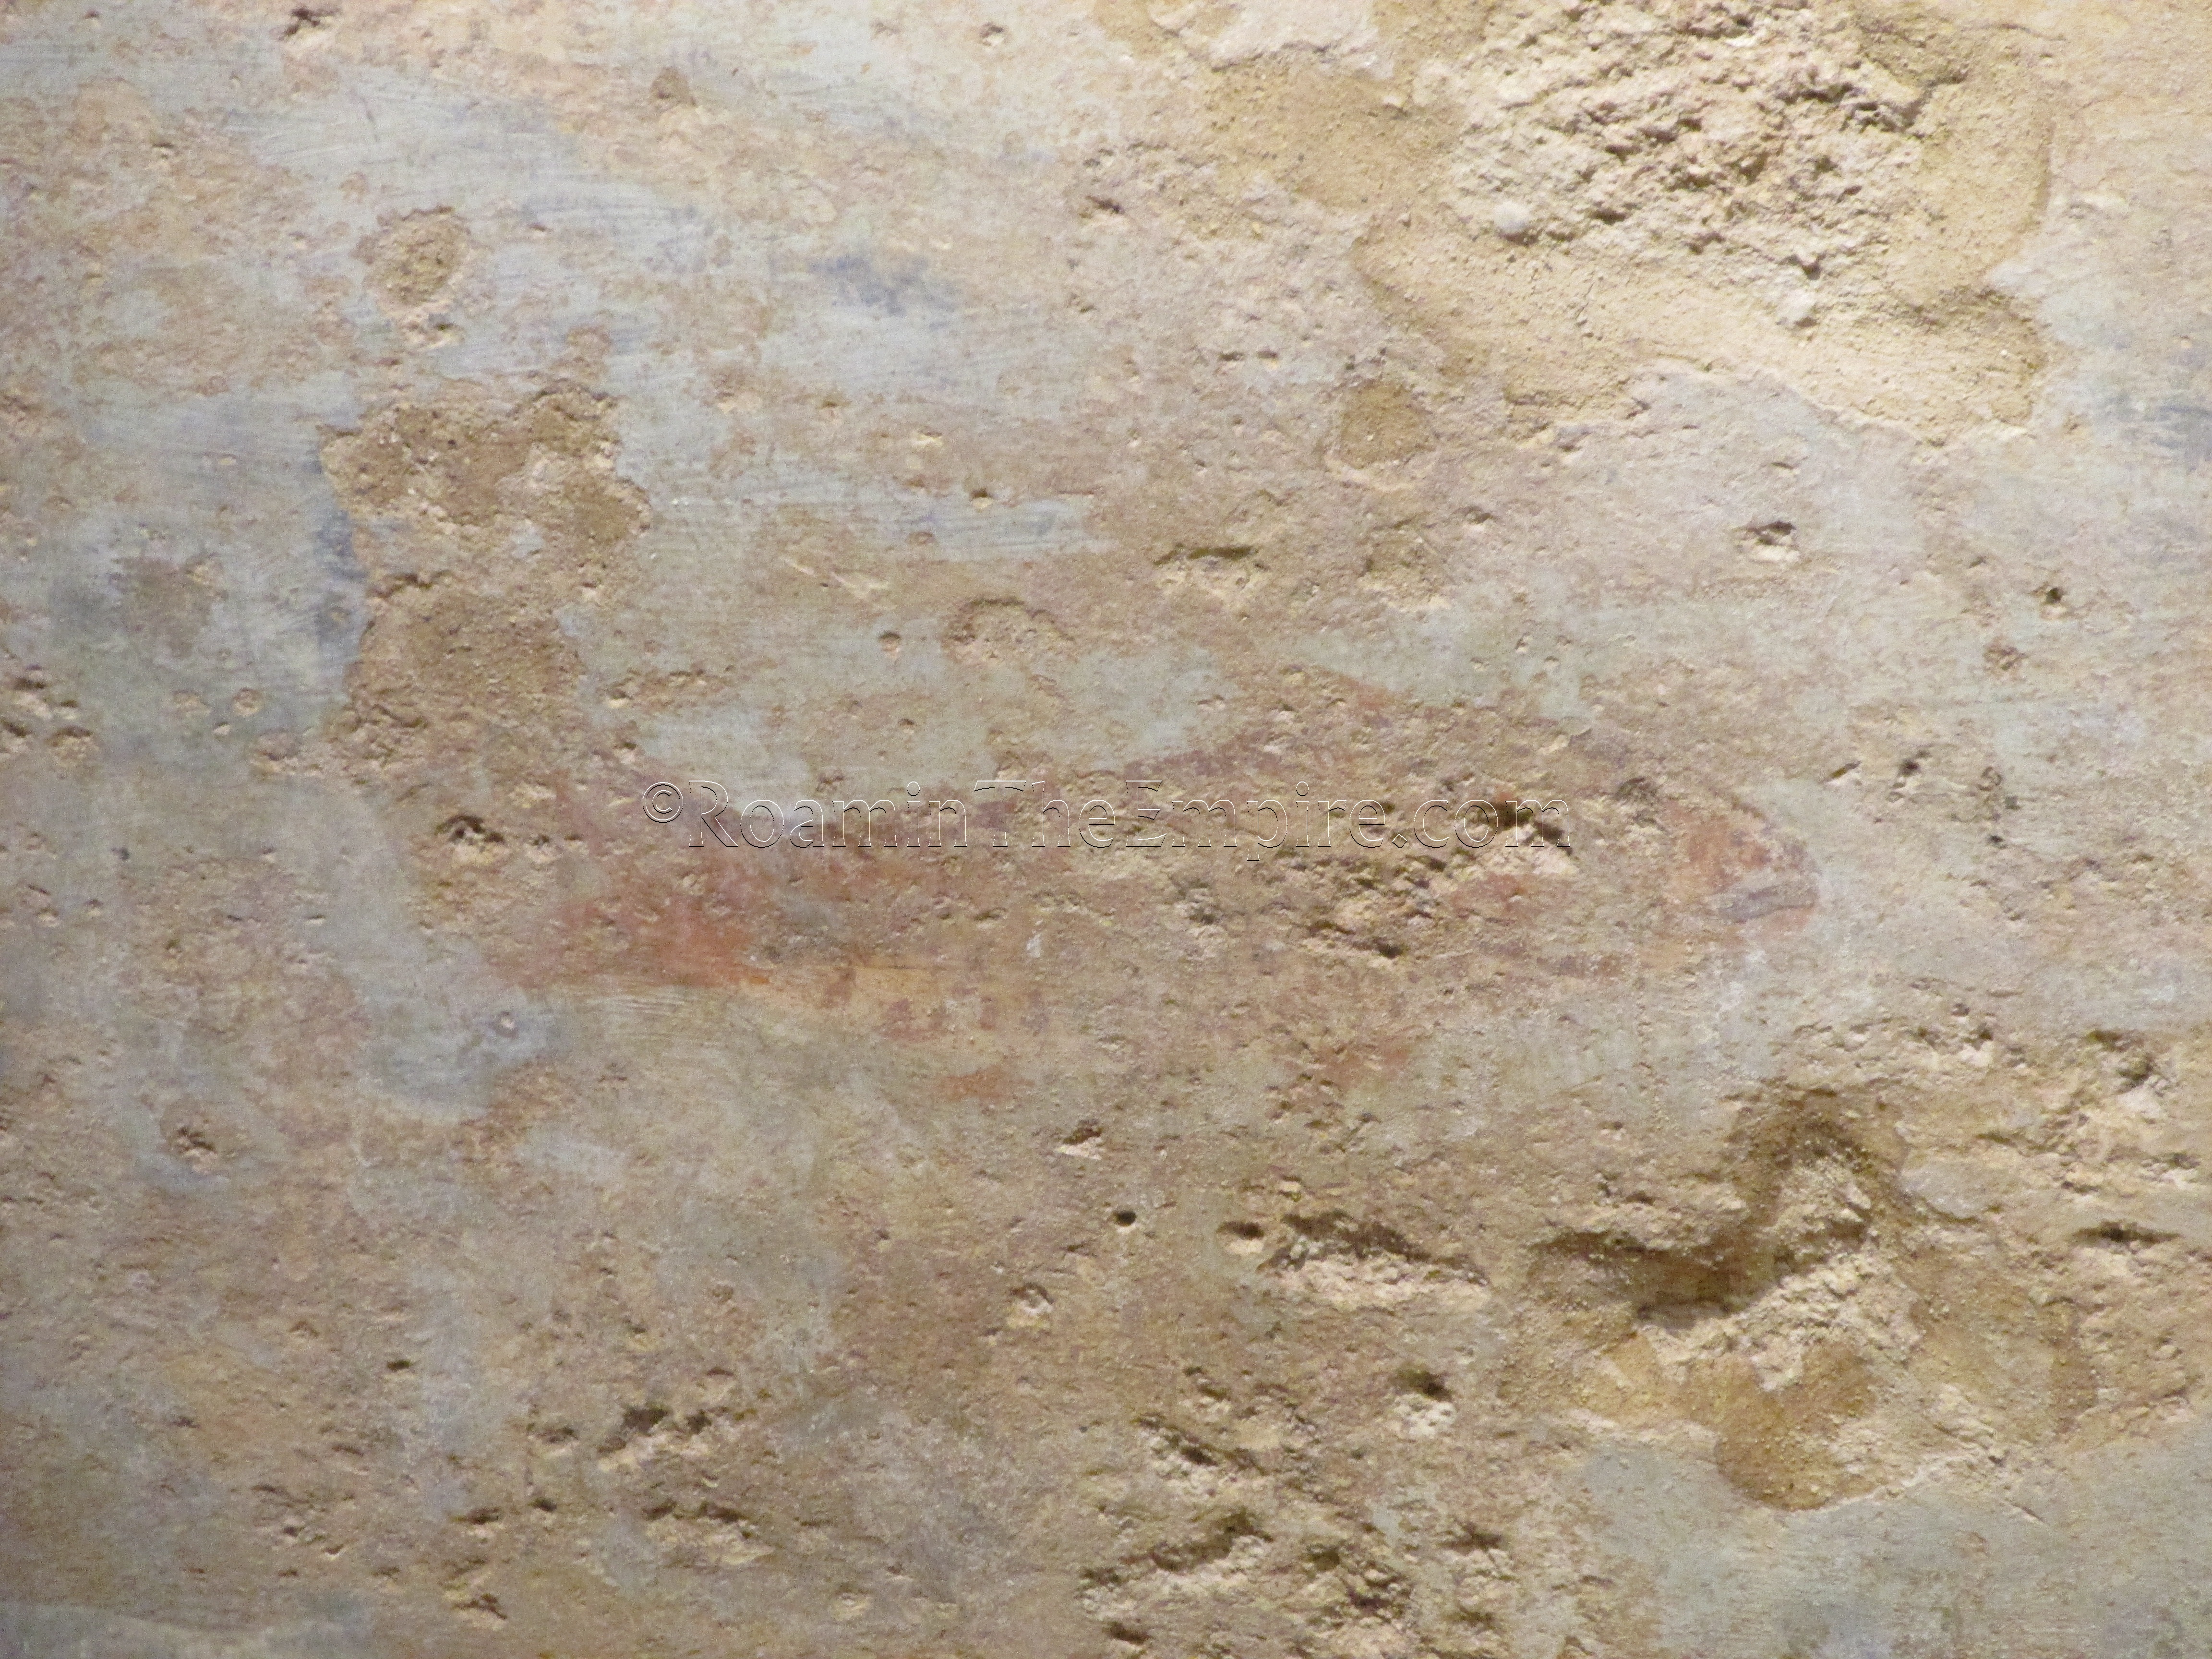 Painting of a fish on the impluvium in the atrium.